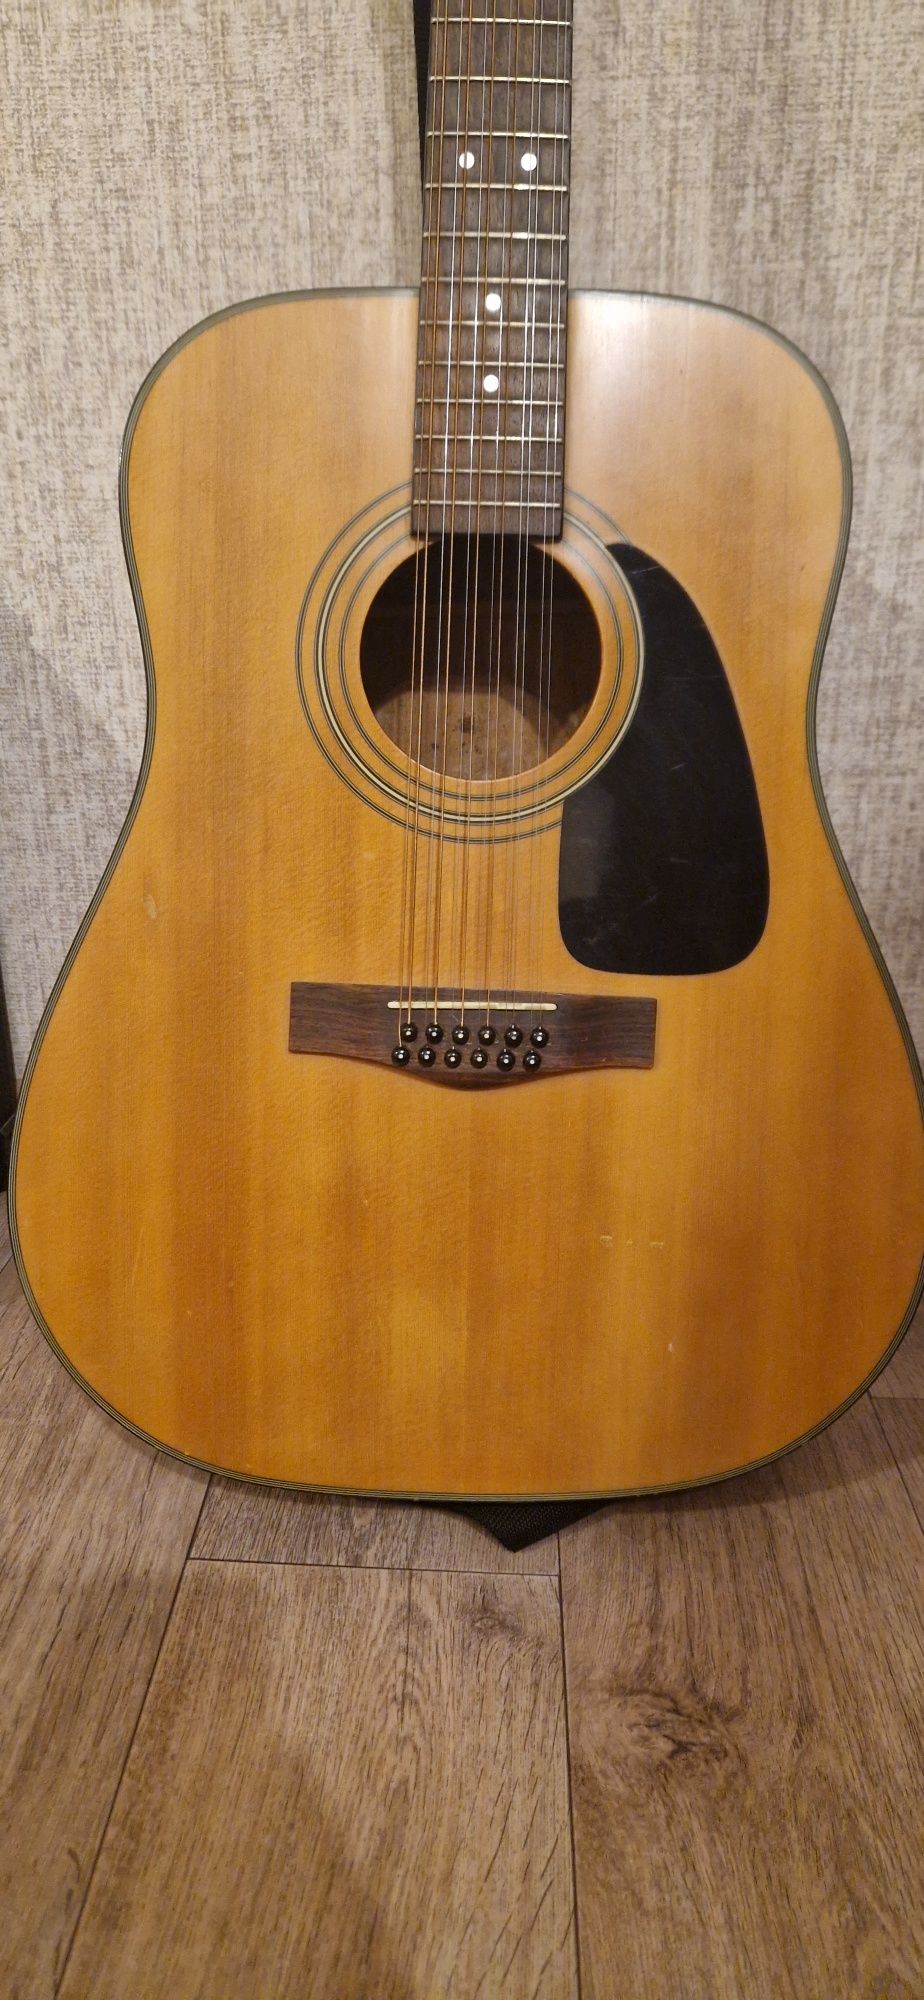 Двенадцатиструнная гитара Fender